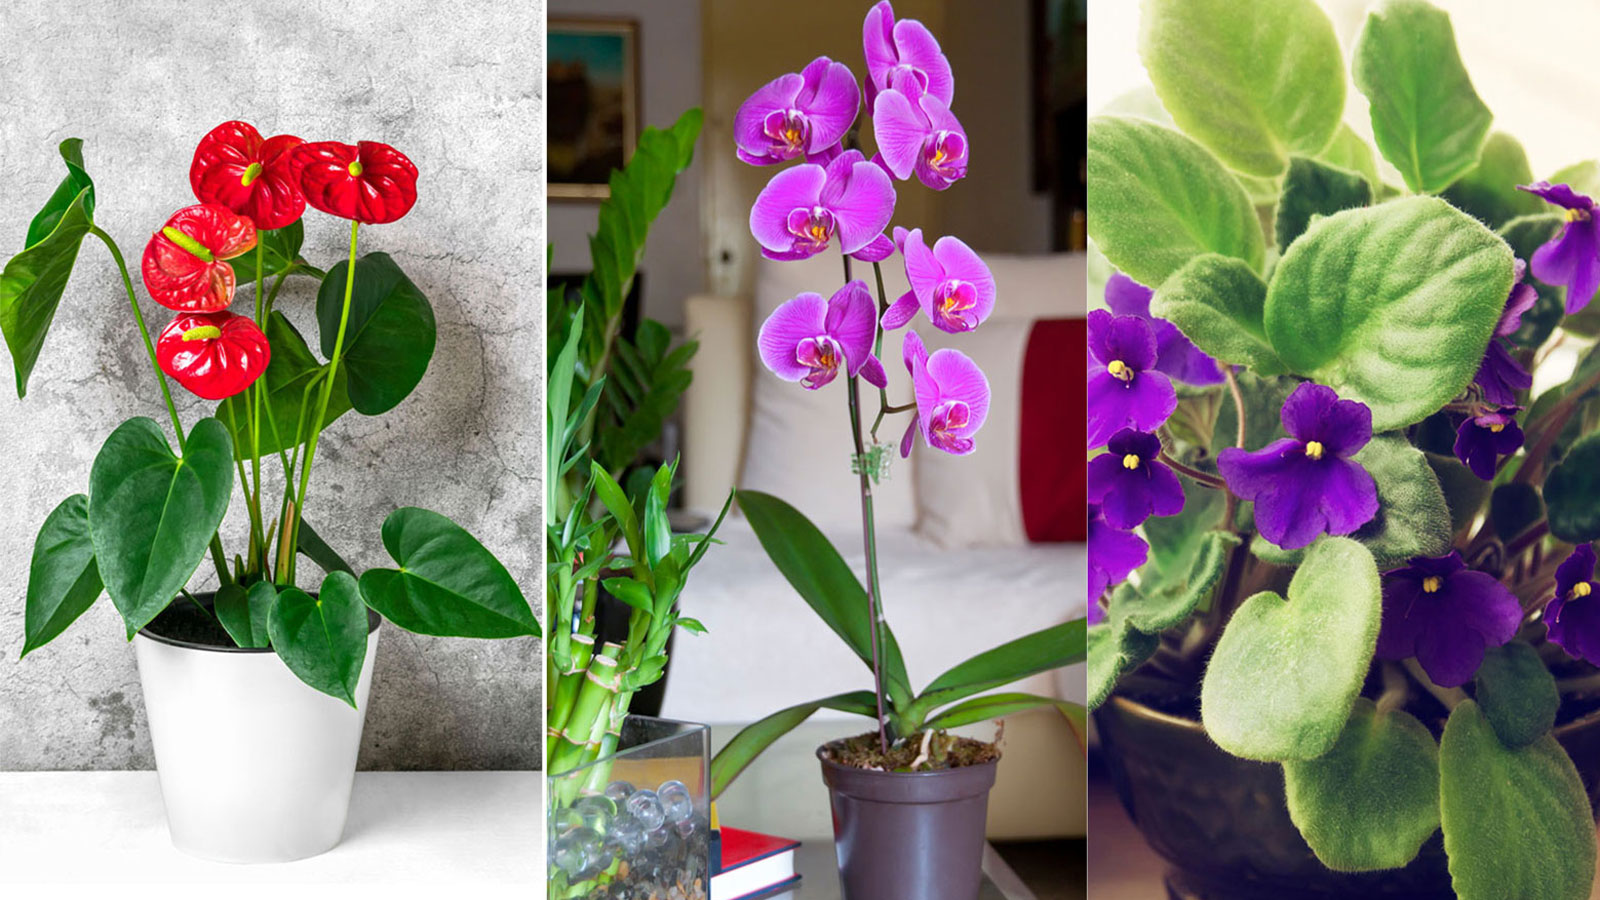 World's Best Purple Delicate Flowers - New Super Popular Leggings